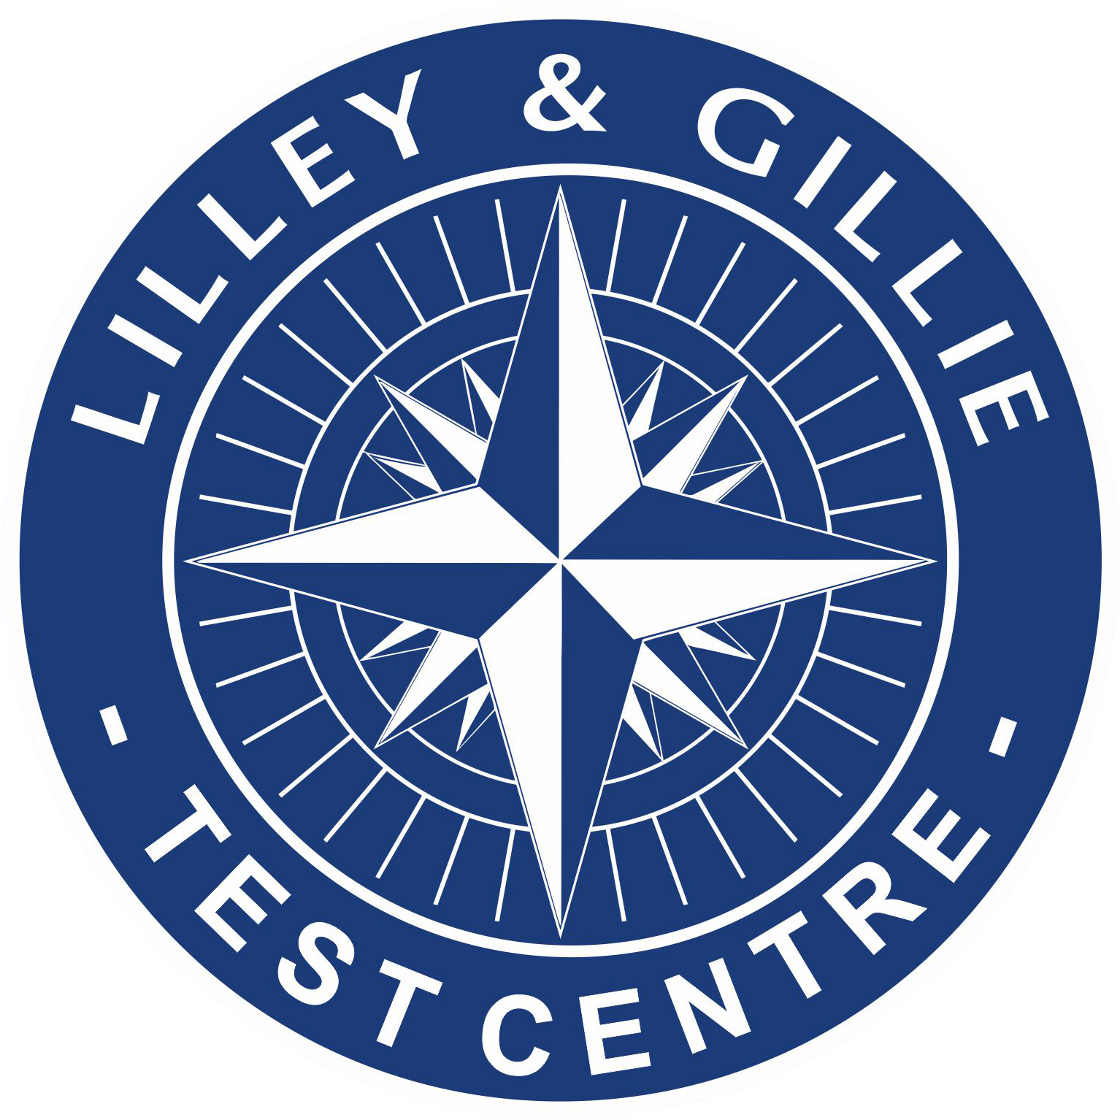 Lilley & Gillie Test Centre